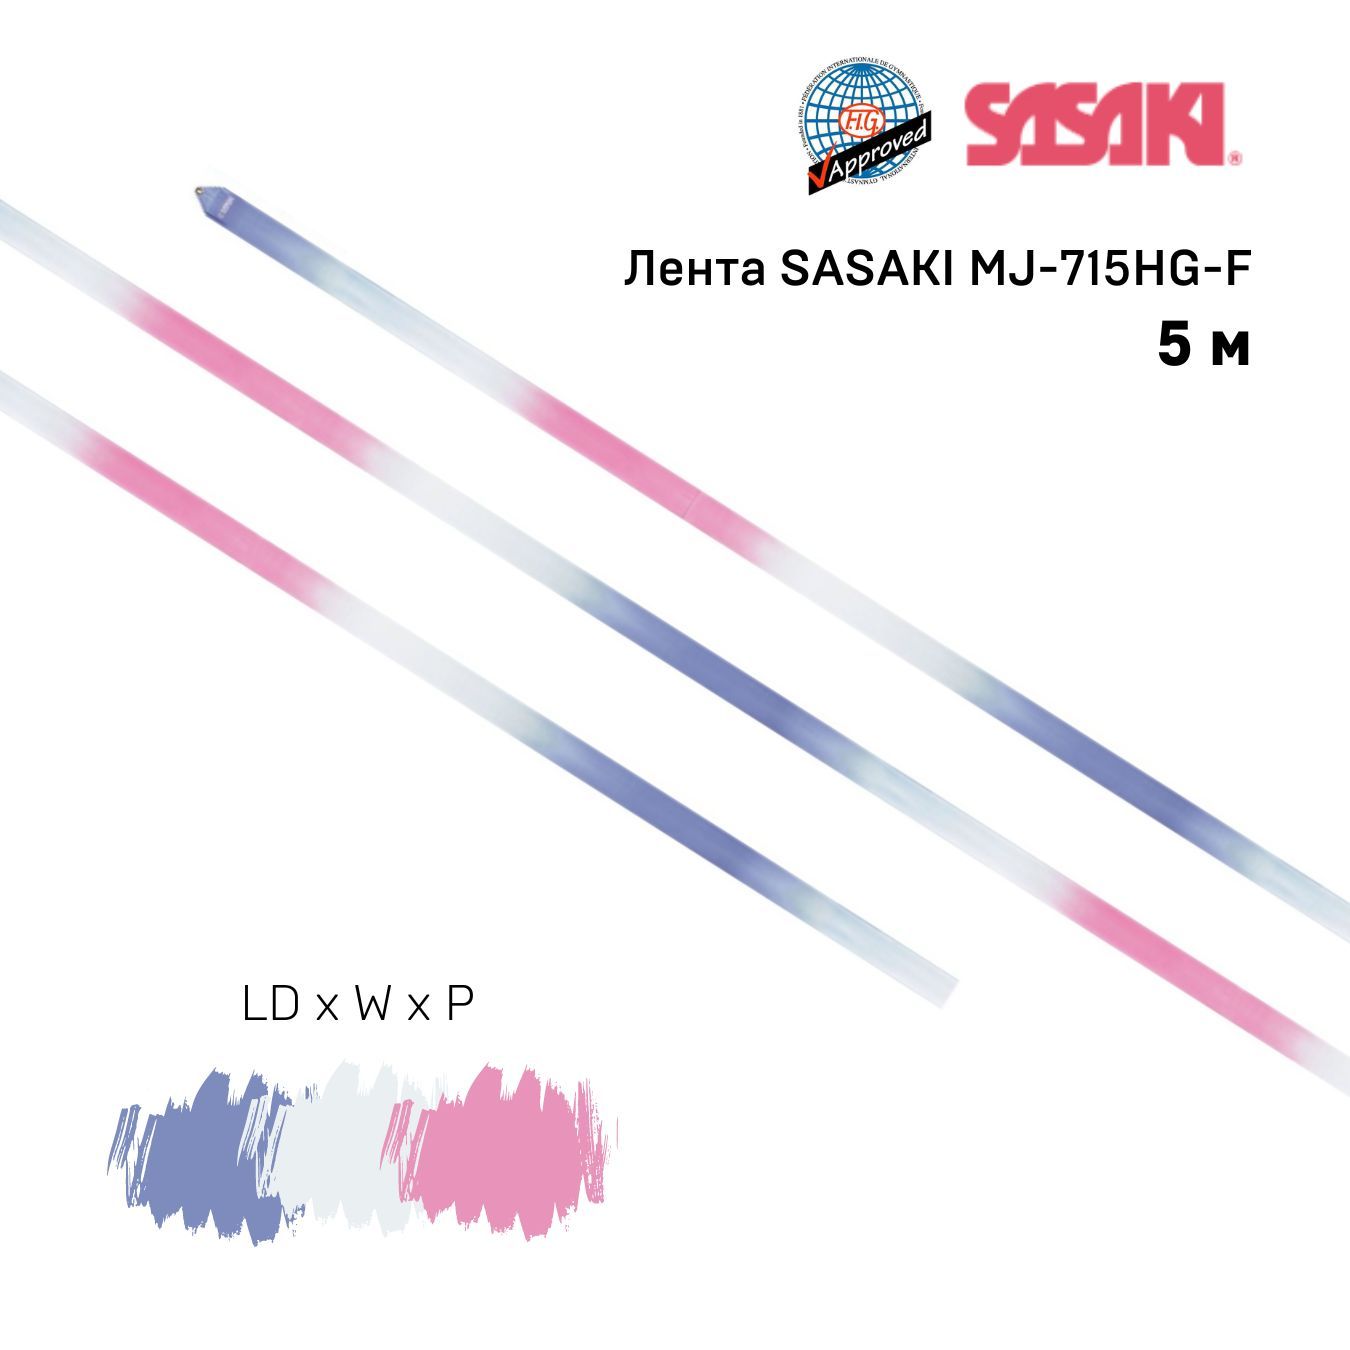 Лента Сасаки 5 метров. Лента Sasaki расцветки. Лента Сасаки 013. Лента Sasaki 5 м MJ-71hg-f цвет LDXWXP. Лента сасаки купить